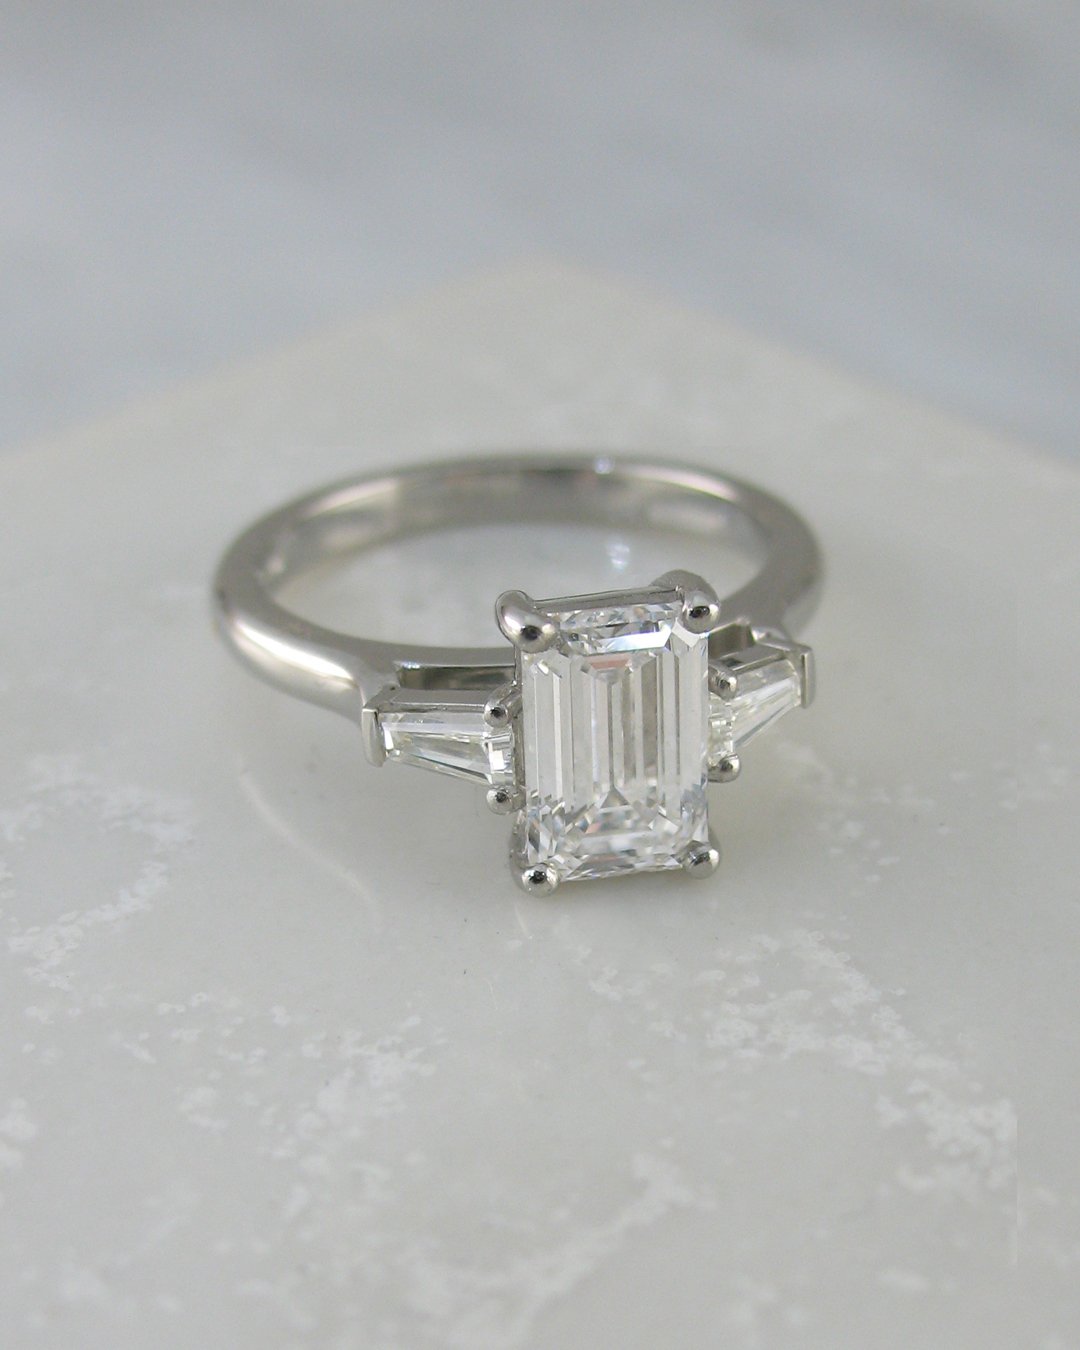 An Art Deco style emerald cut diamond engagement ring